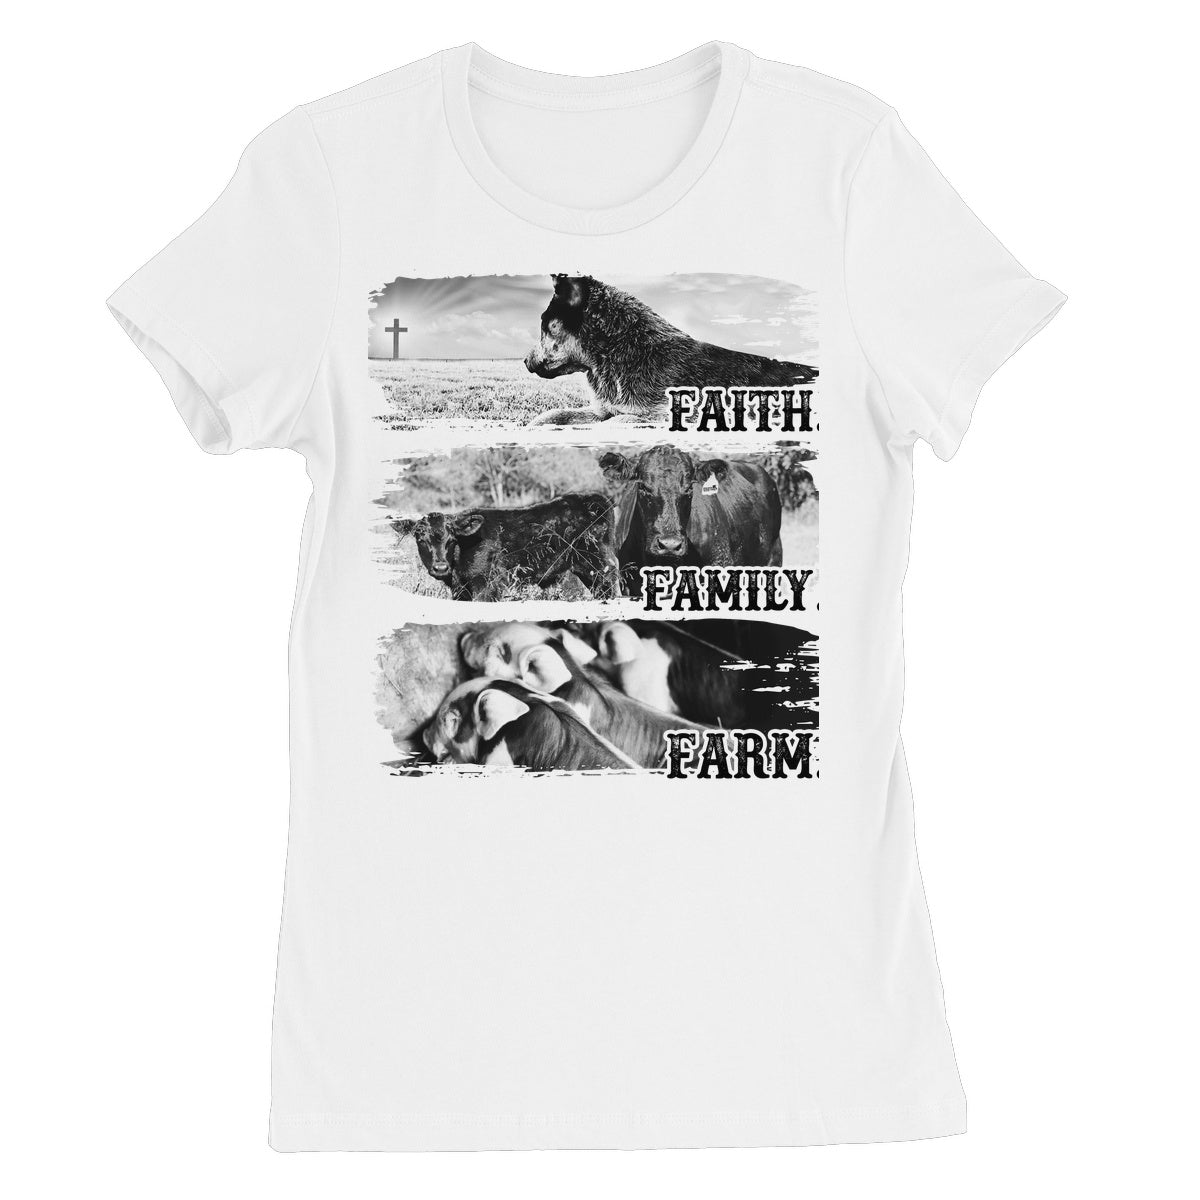 Faith.Family.Farm. Women's Favourite T-Shirt